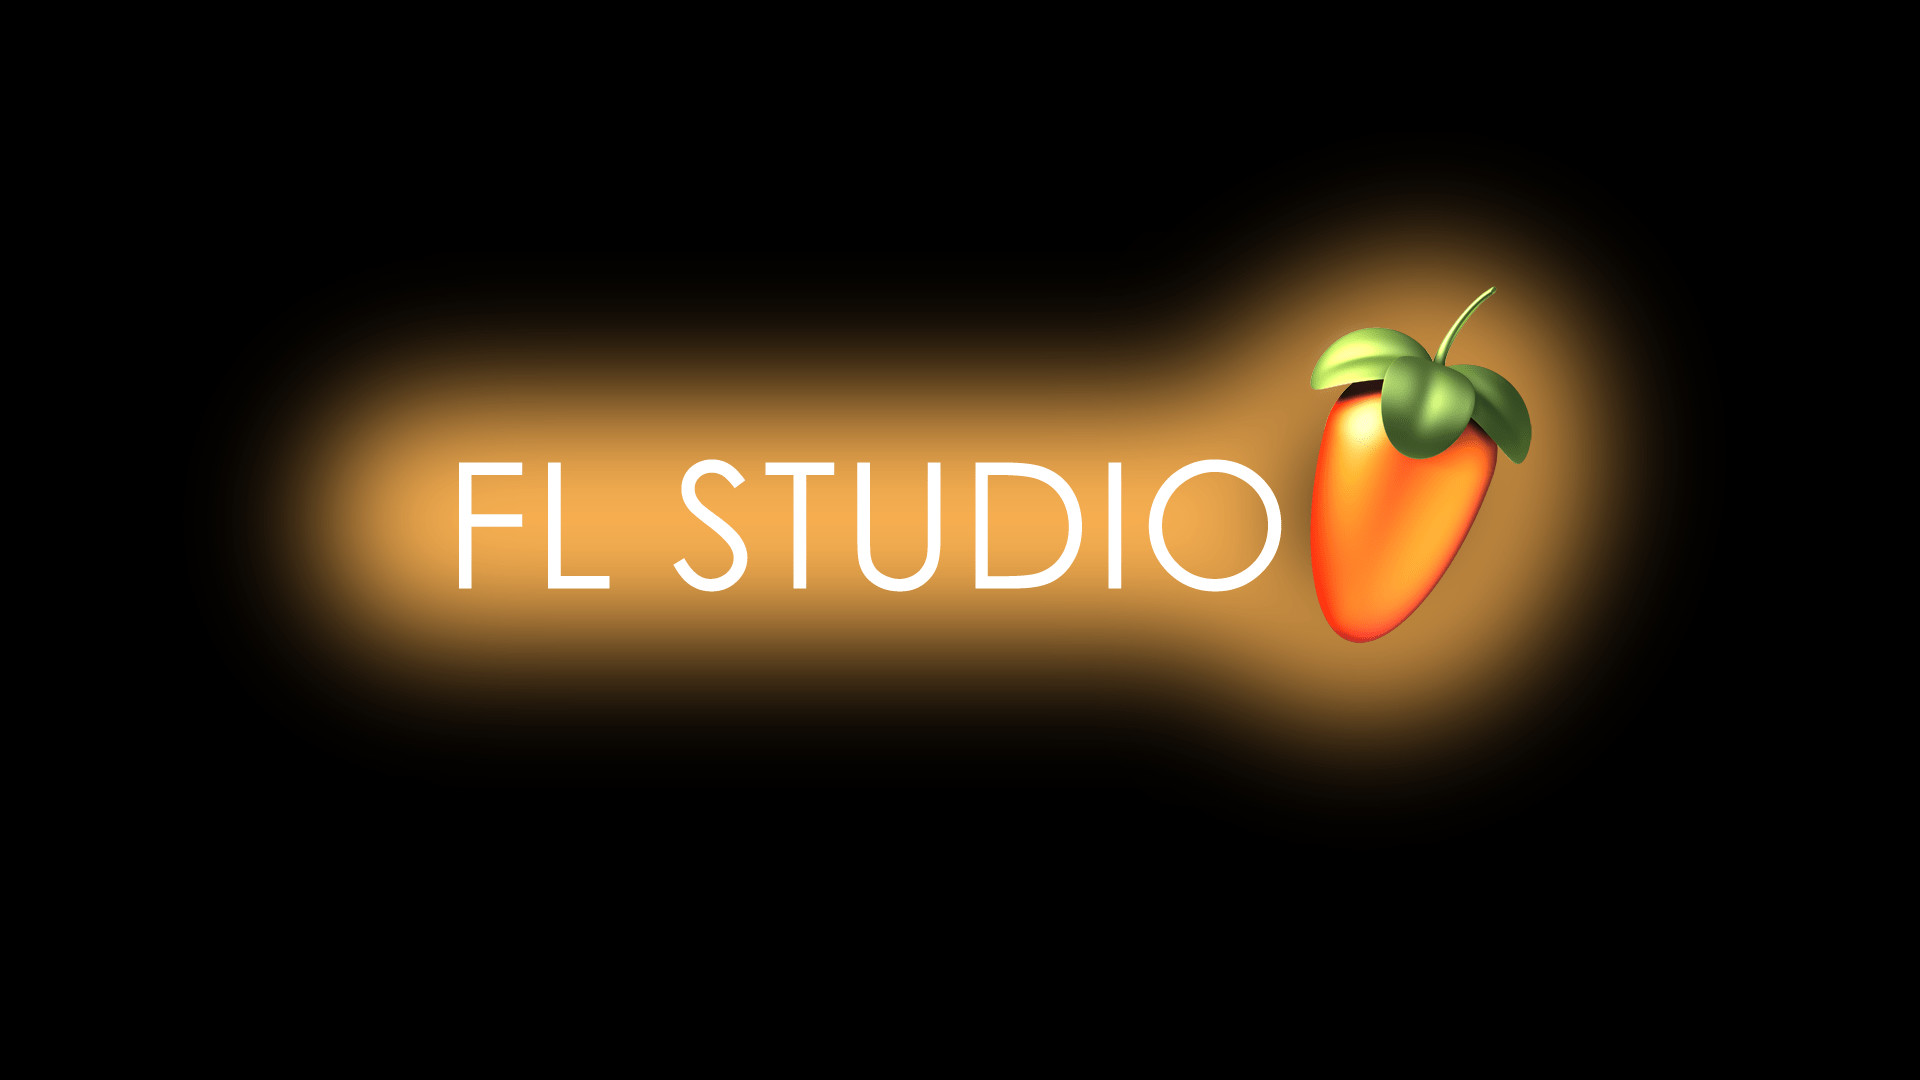 fl studio logo evolution